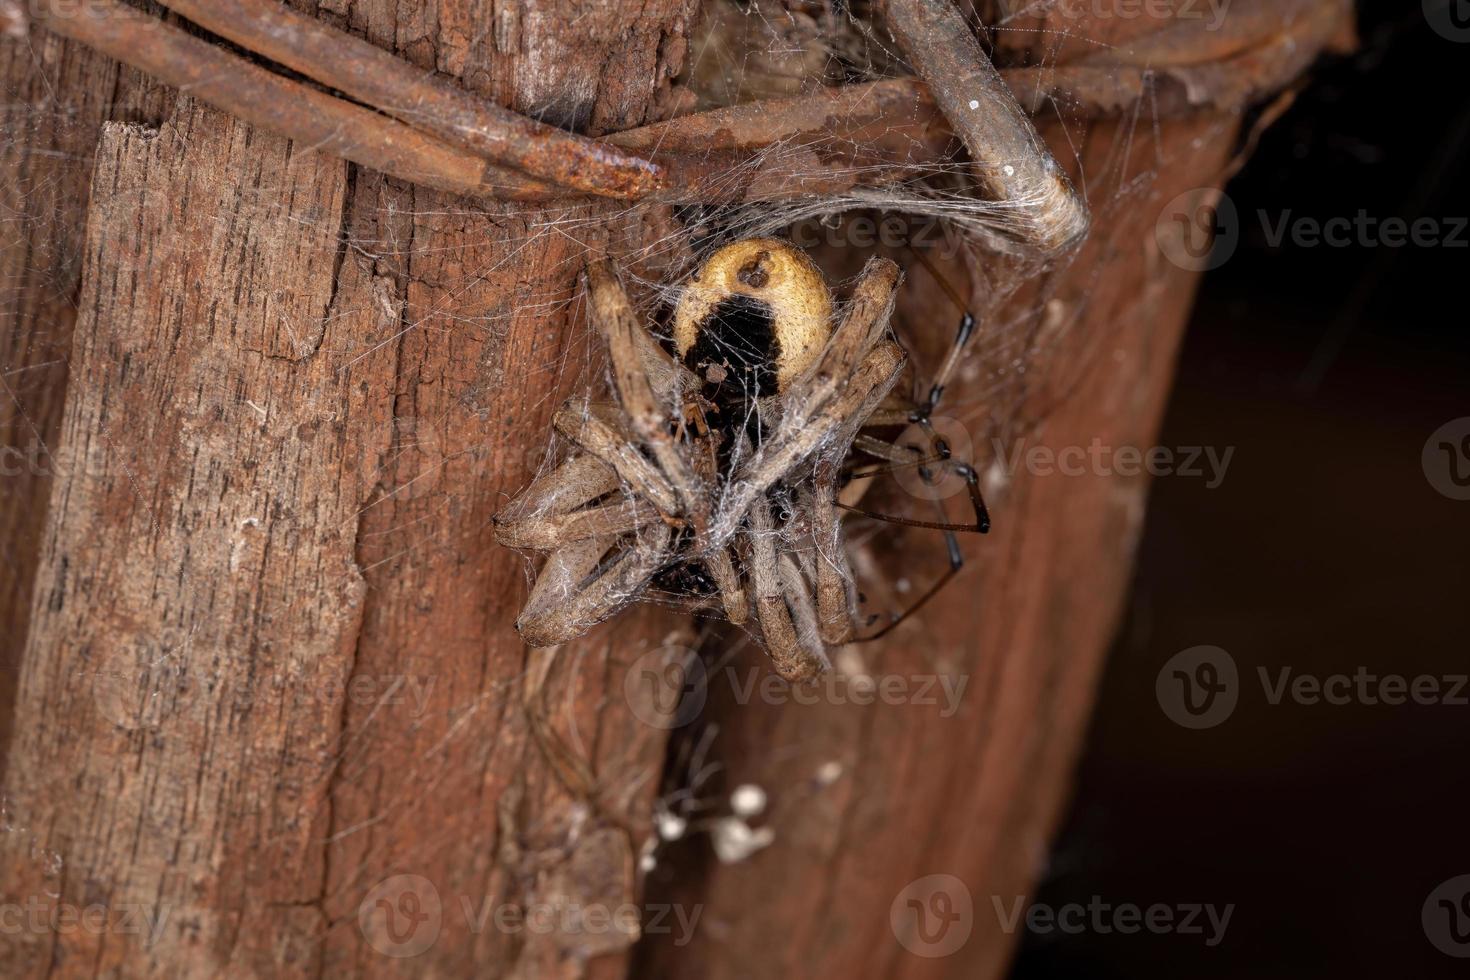 Araignée-loup adulte la proie d'une araignée veuve brune photo